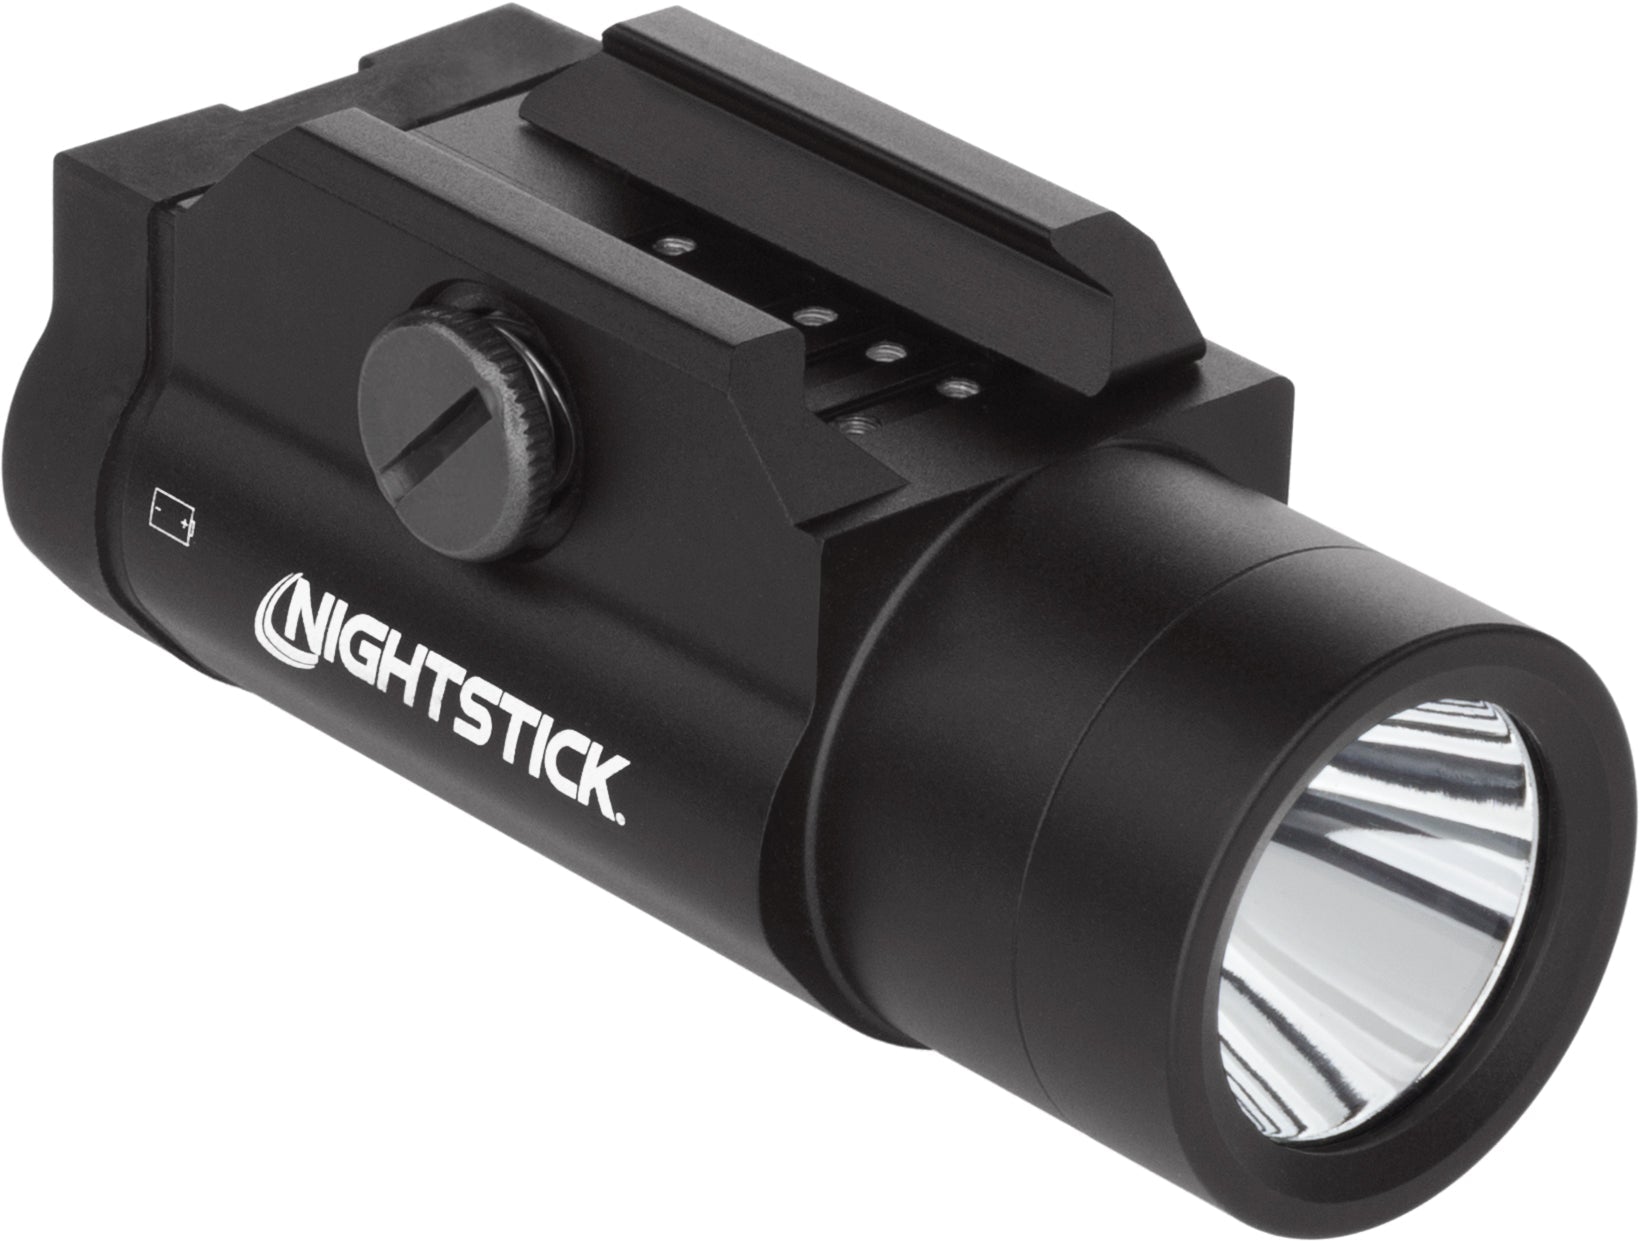 Nightstick - Tactical Weapon-Mounted Light - Long Gun